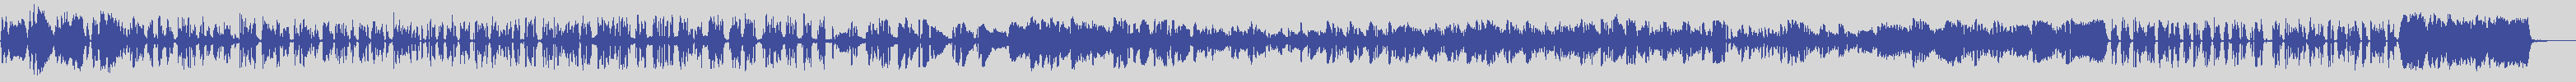 digiphonic_records [DPR010] Judy Garland - Singin' in the Rain [Original Mix] audio wave form